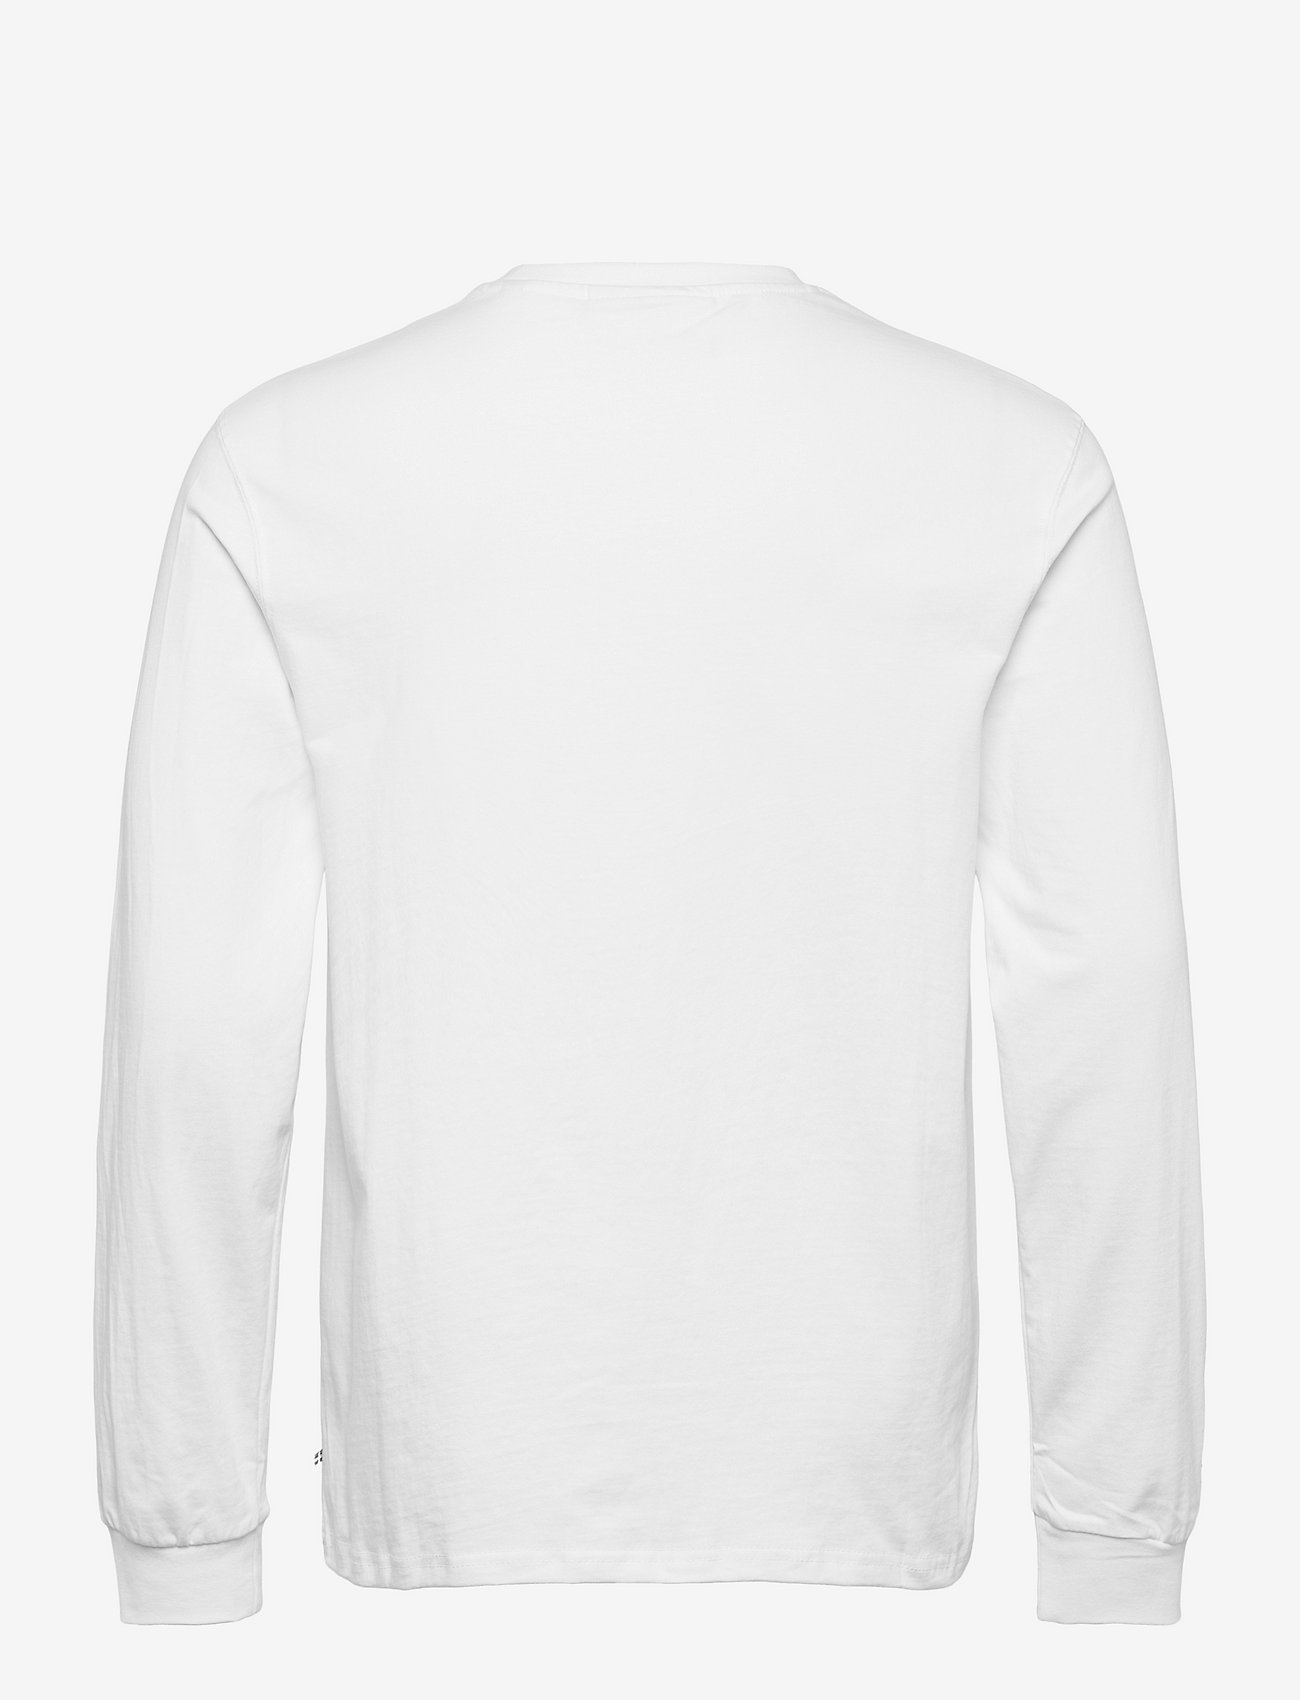 HAN Kjøbenhavn - Casual Tee Long Sleeve - basic t-krekli - white logo - 1